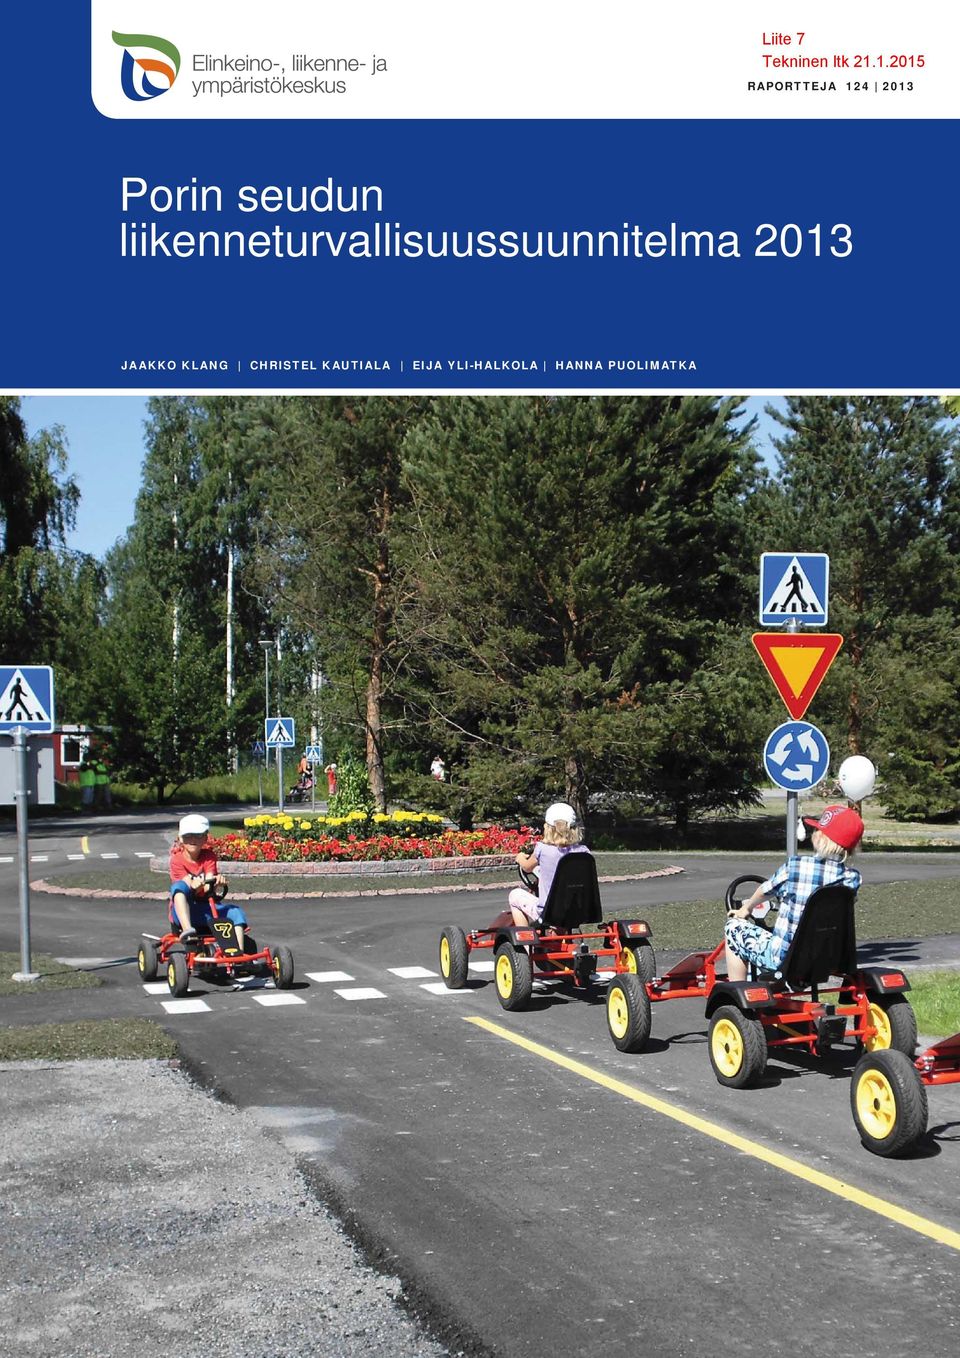 liikenneturvallisuussuunnitelma 2013